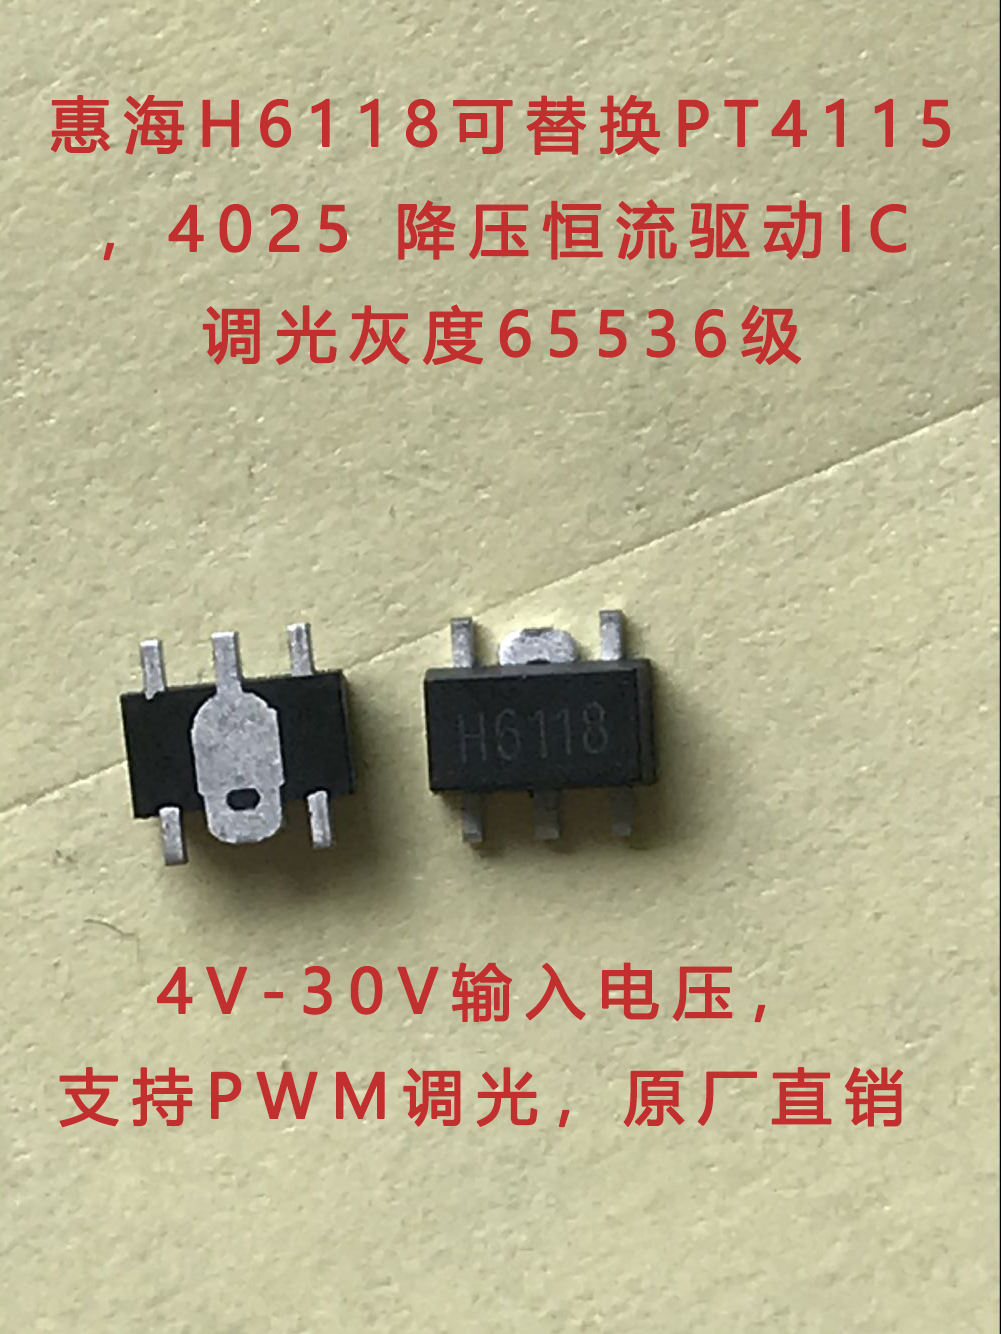 PT4115 30V输入电压 1.5A/1.2A 可用惠海H6118 调光辉度65536级